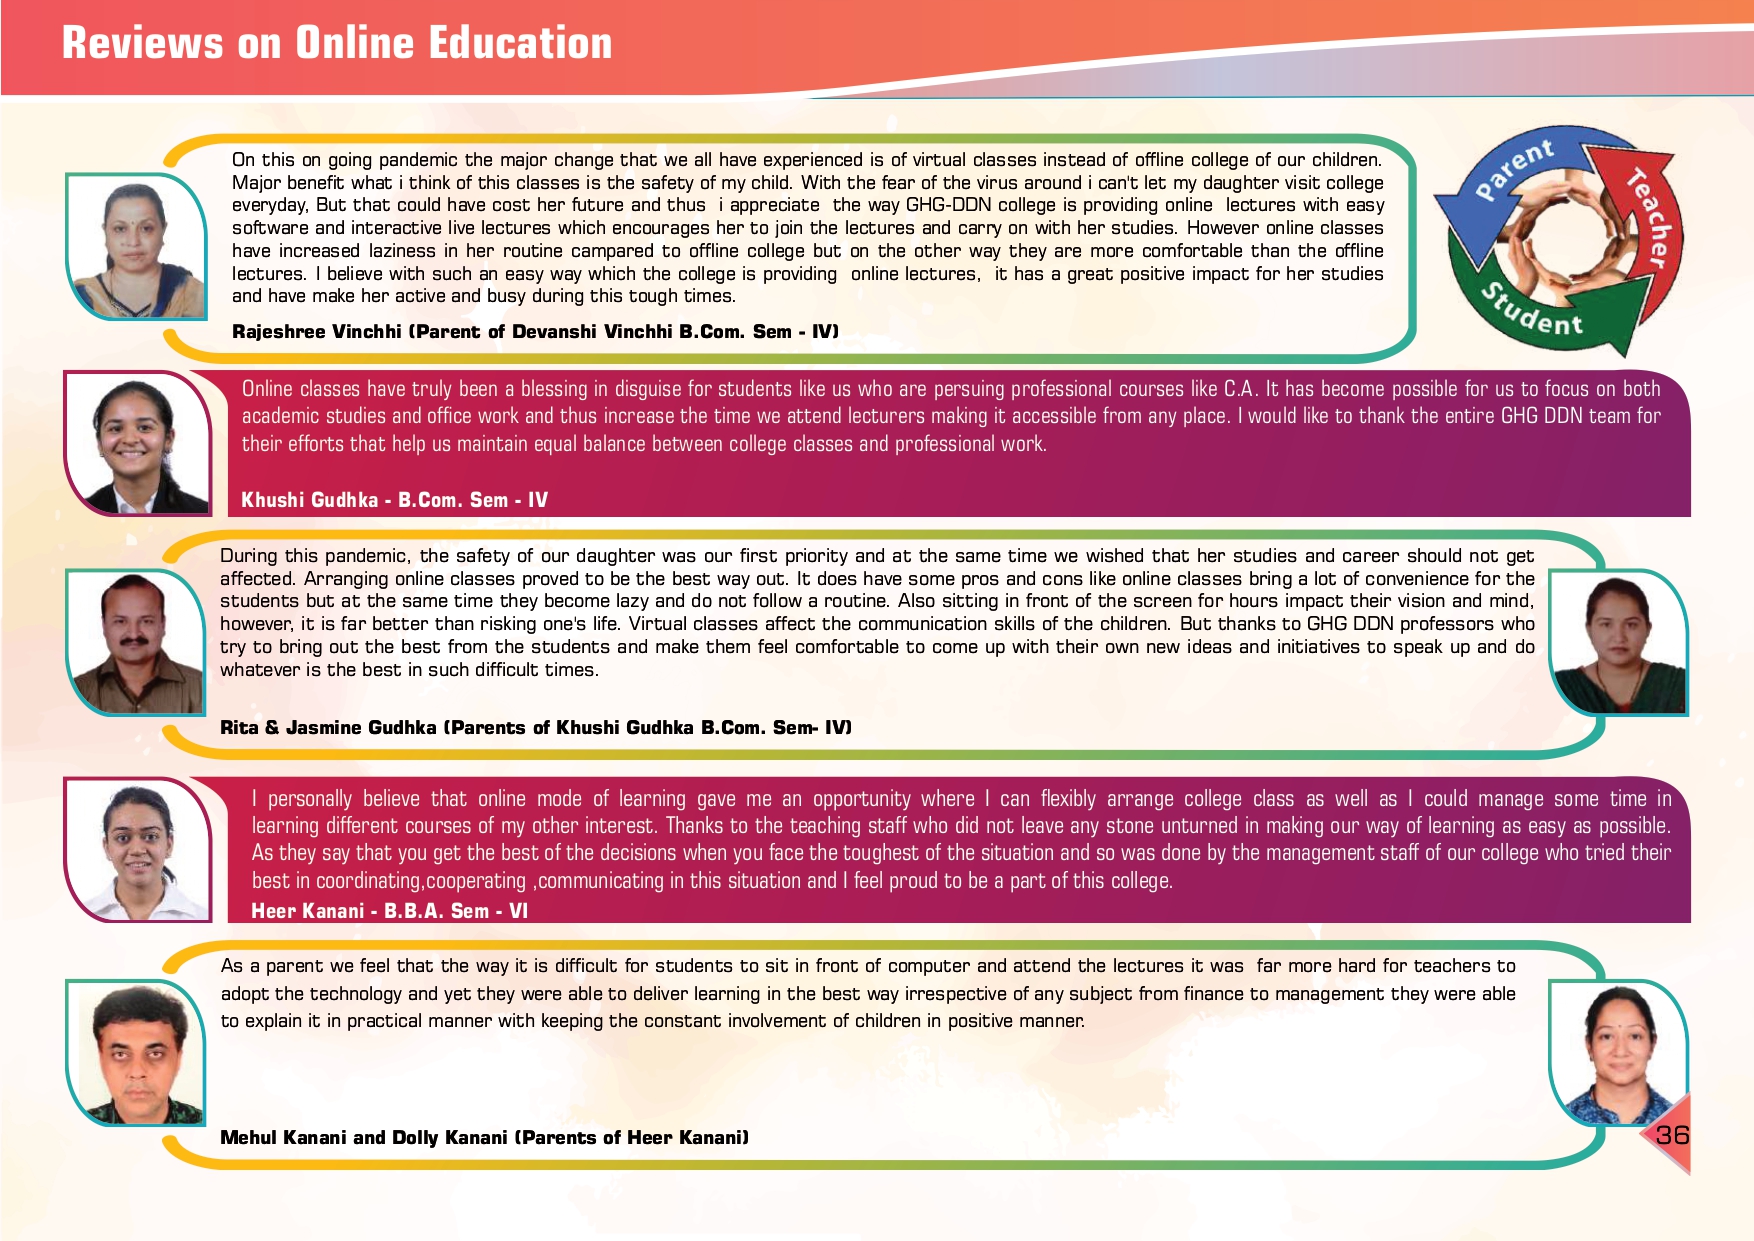 Online Education Review, ghg ddn, oswhal education trust, jamnagar